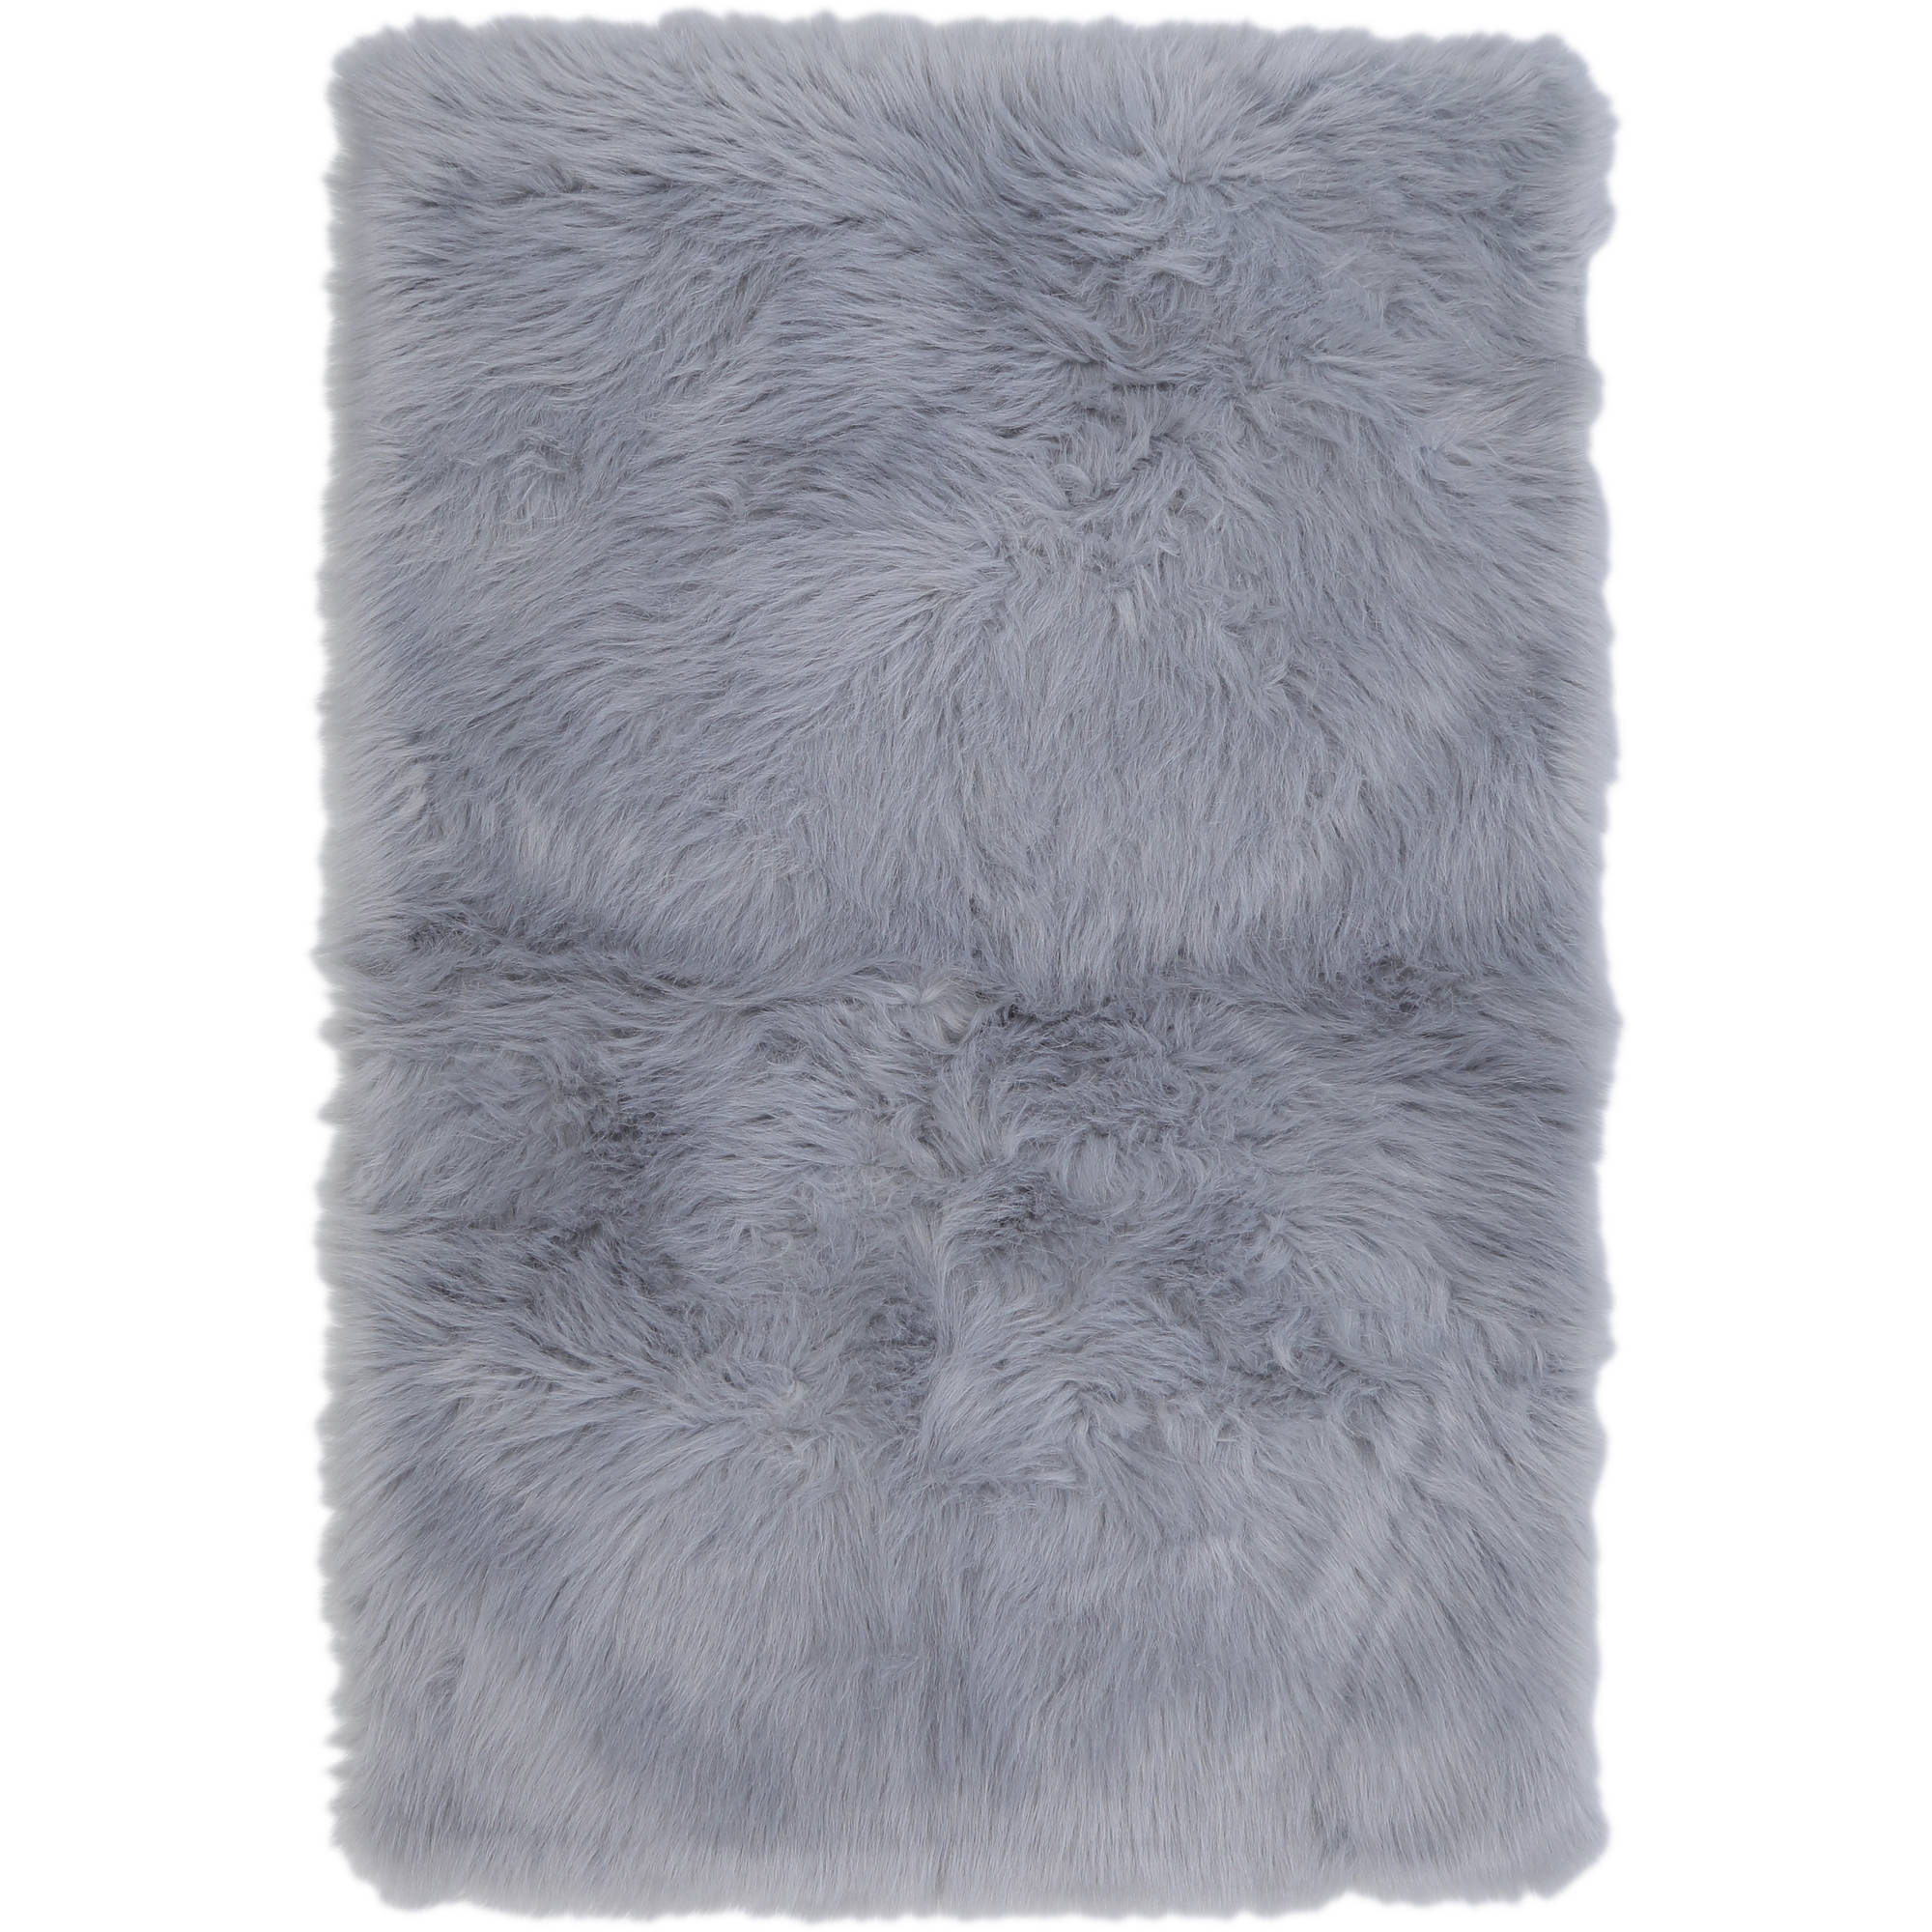 Mainstays White Faux Fur Rug Non-Skid Fluffy Floor Rug, 30x46 